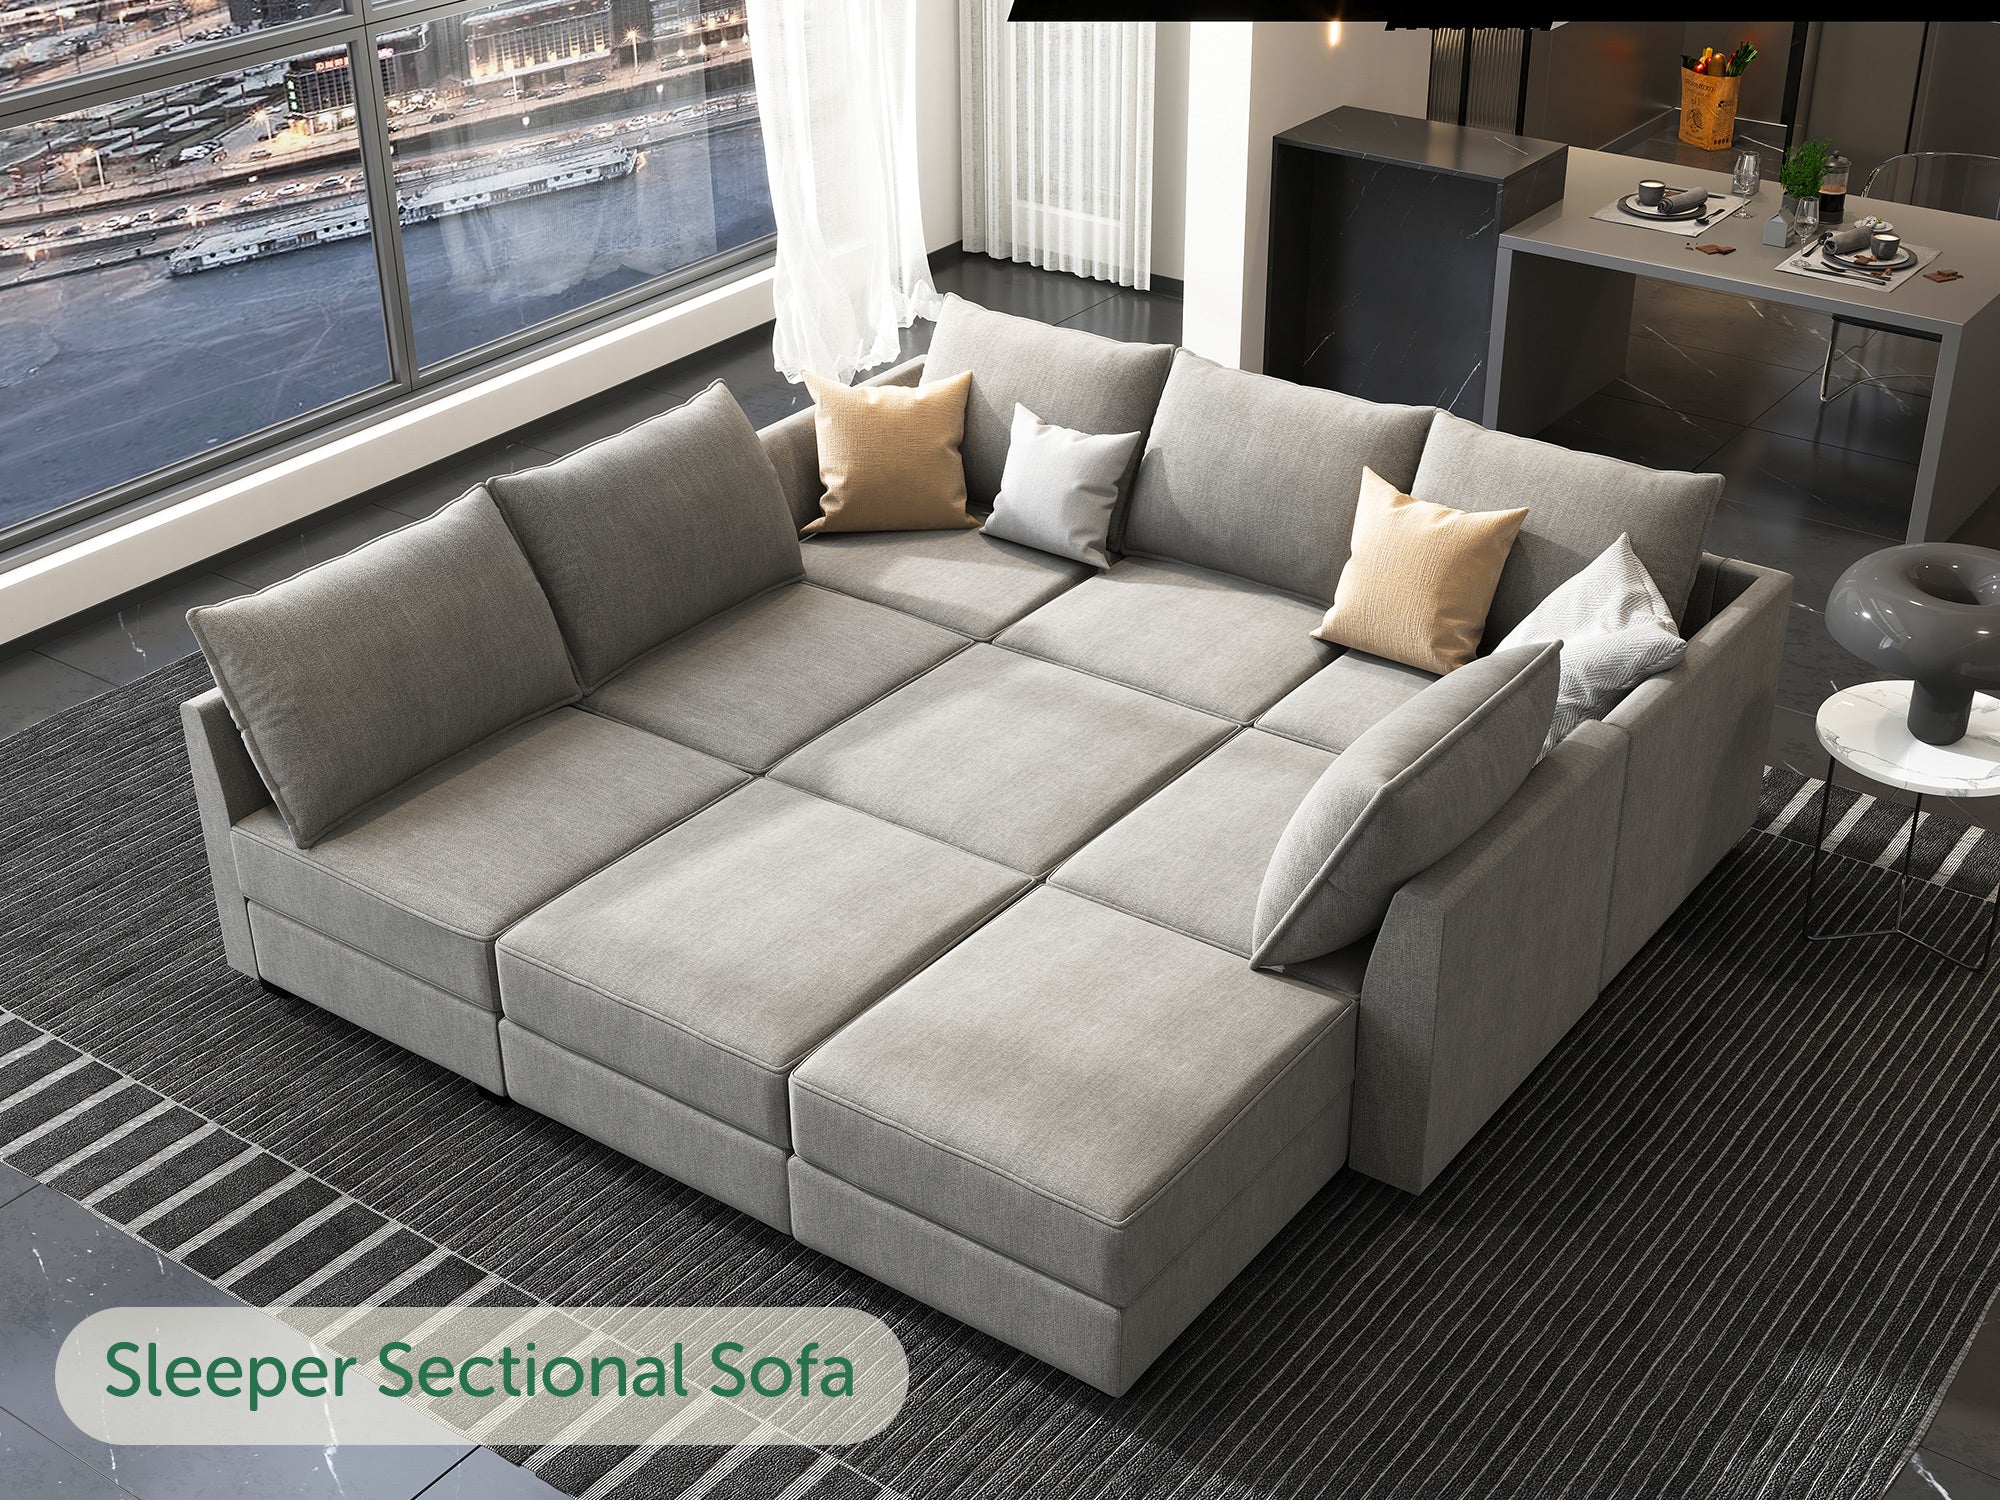 HONBAY 3-Seat Modular Sofa with Storage & Convertible Sofa Bed